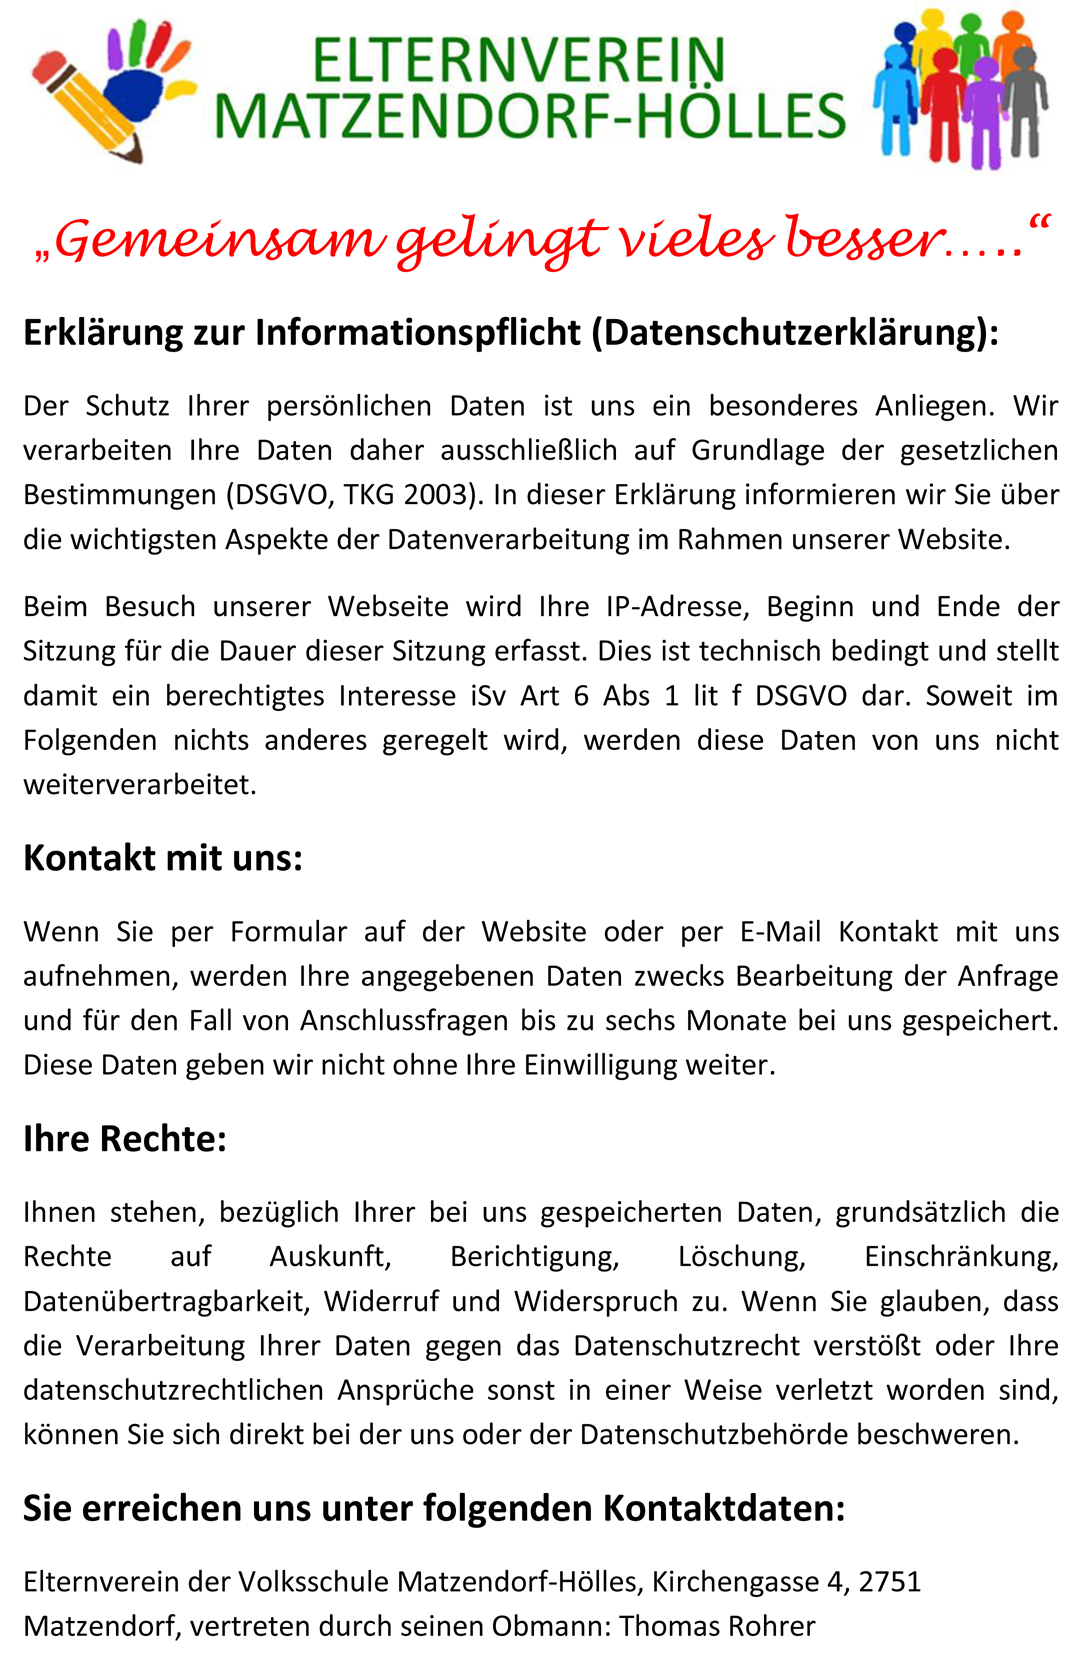 EV Matzendorf-Hölles - Datenschutz